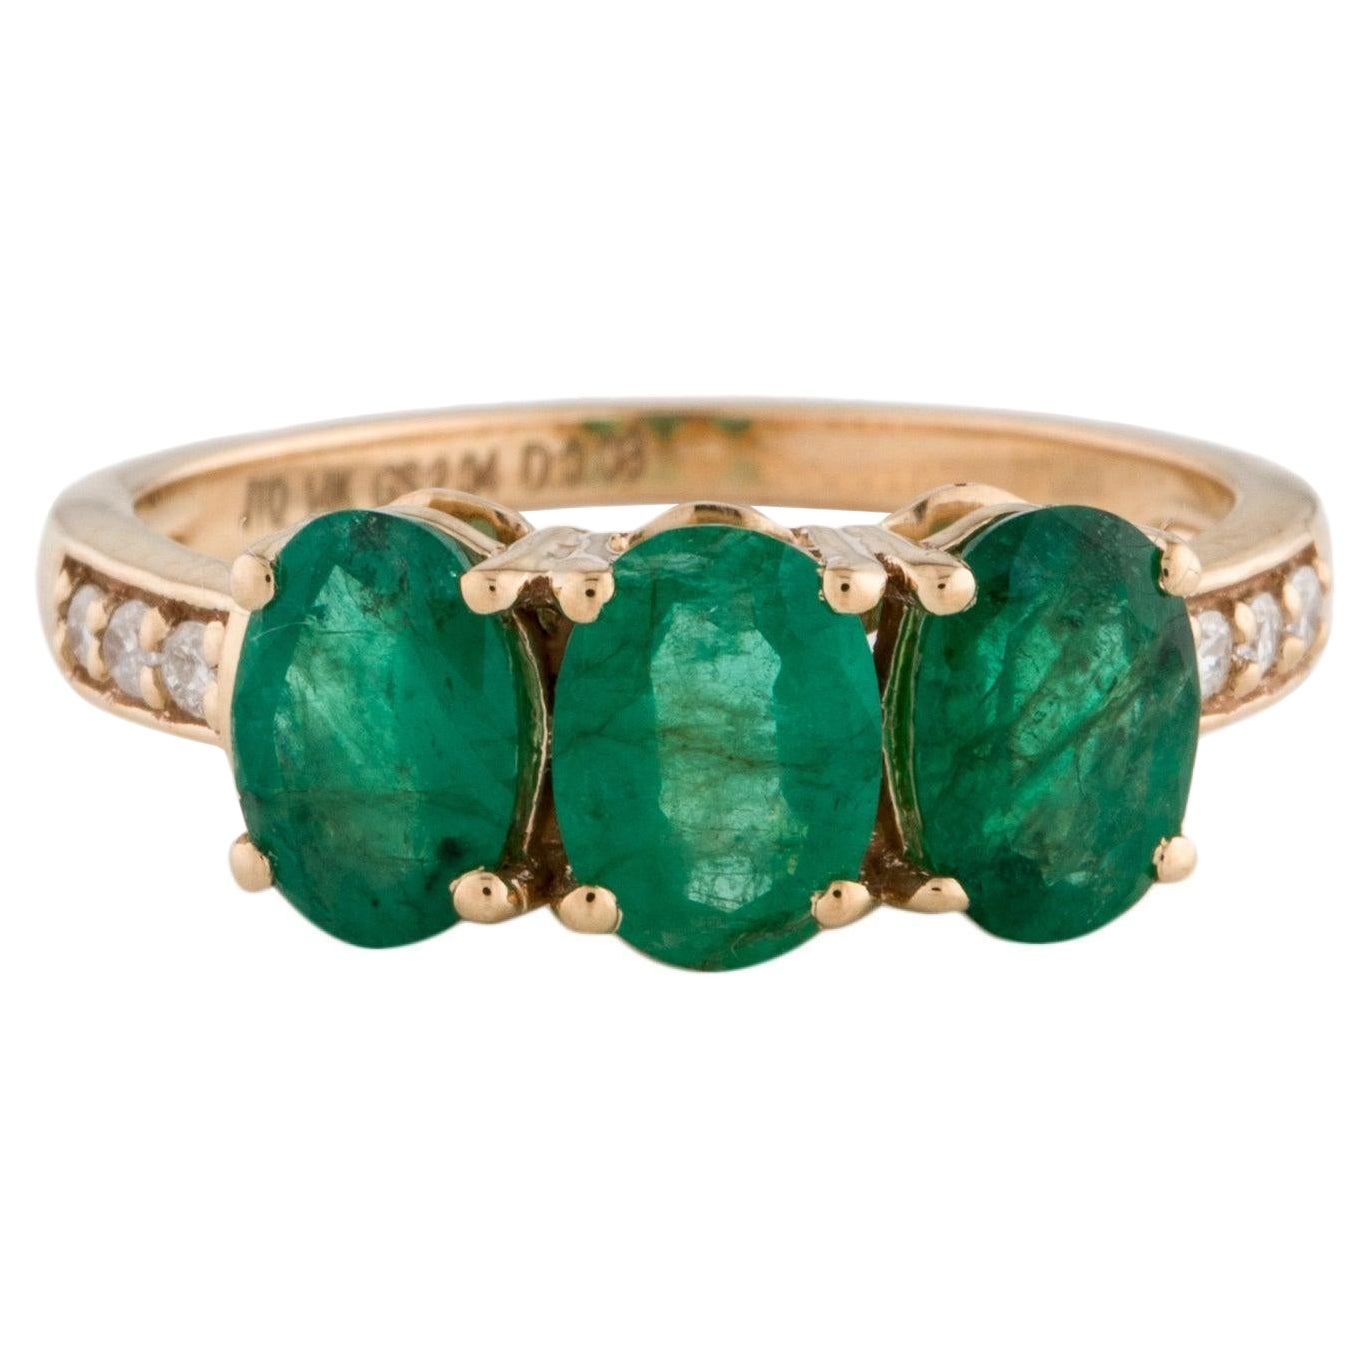 Stunning 14K Emerald & Diamond Band Ring 2.10ctw - Size 6.75 - Timeless Luxury